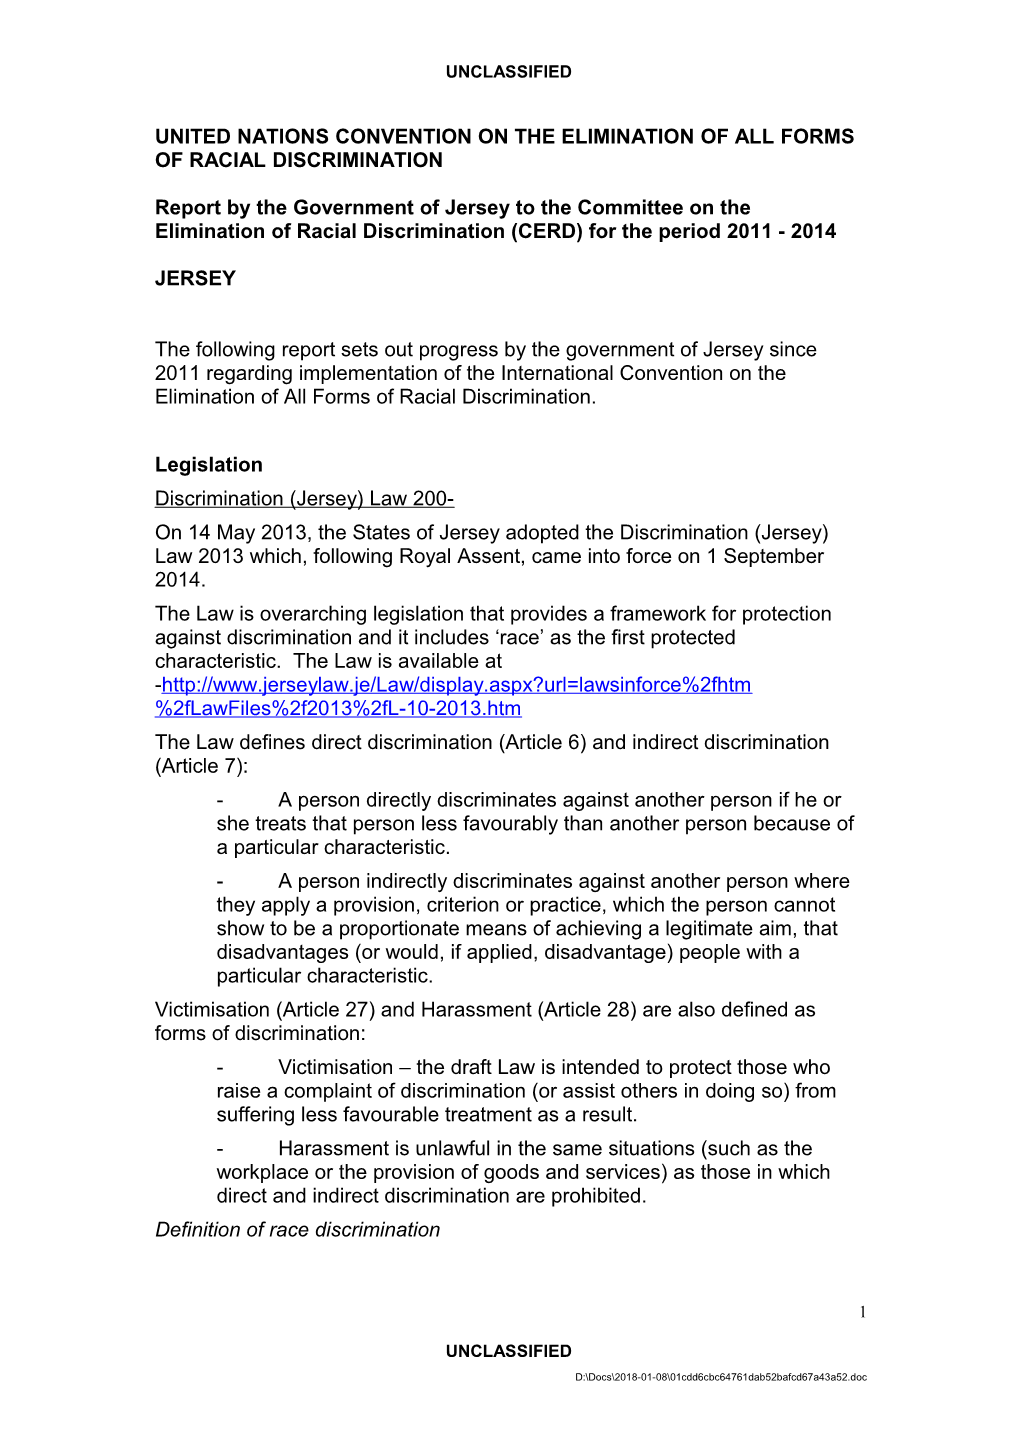 Jersey Report Part of CERD Annex B